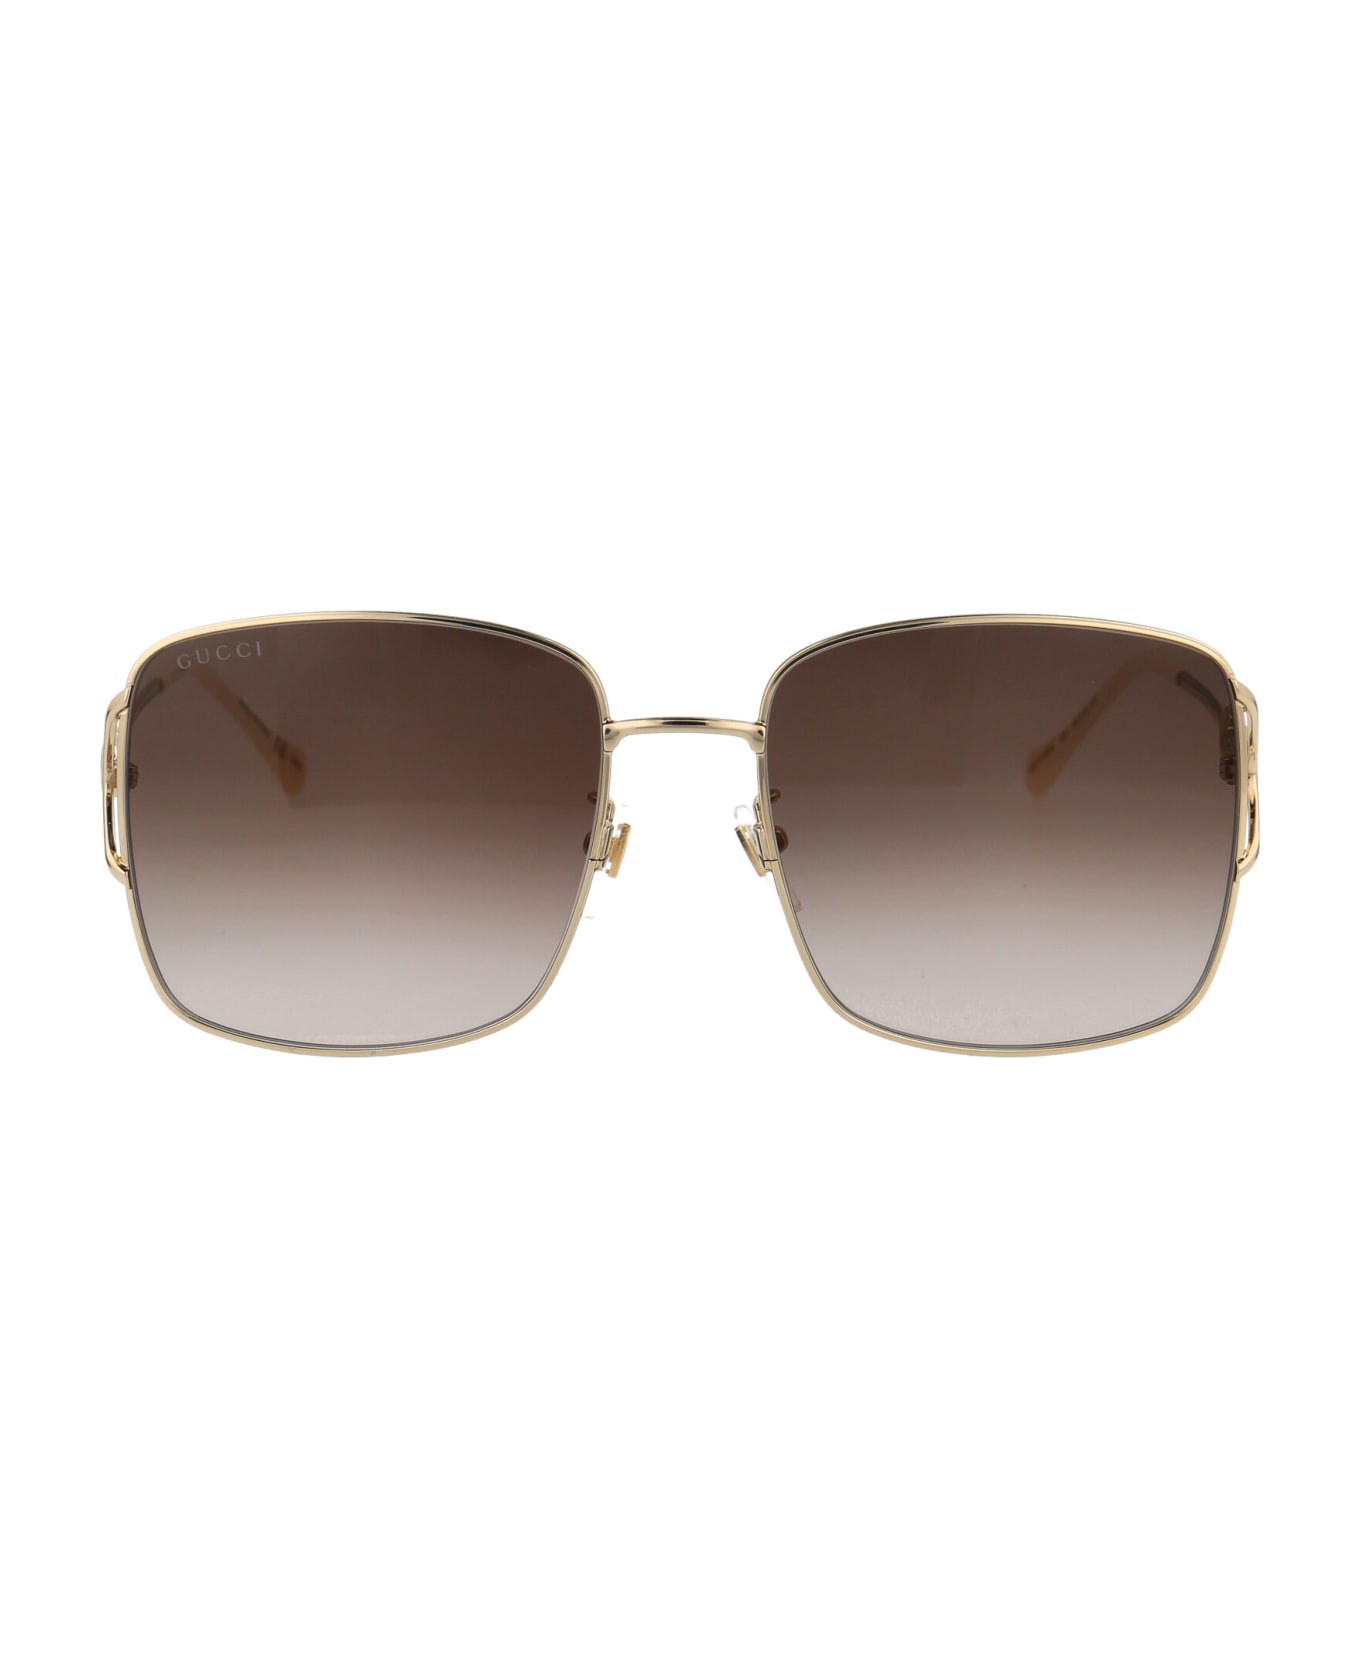 Gucci Eyewear Gg1018sk Sunglasses - 003 GOLD GOLD BROWN